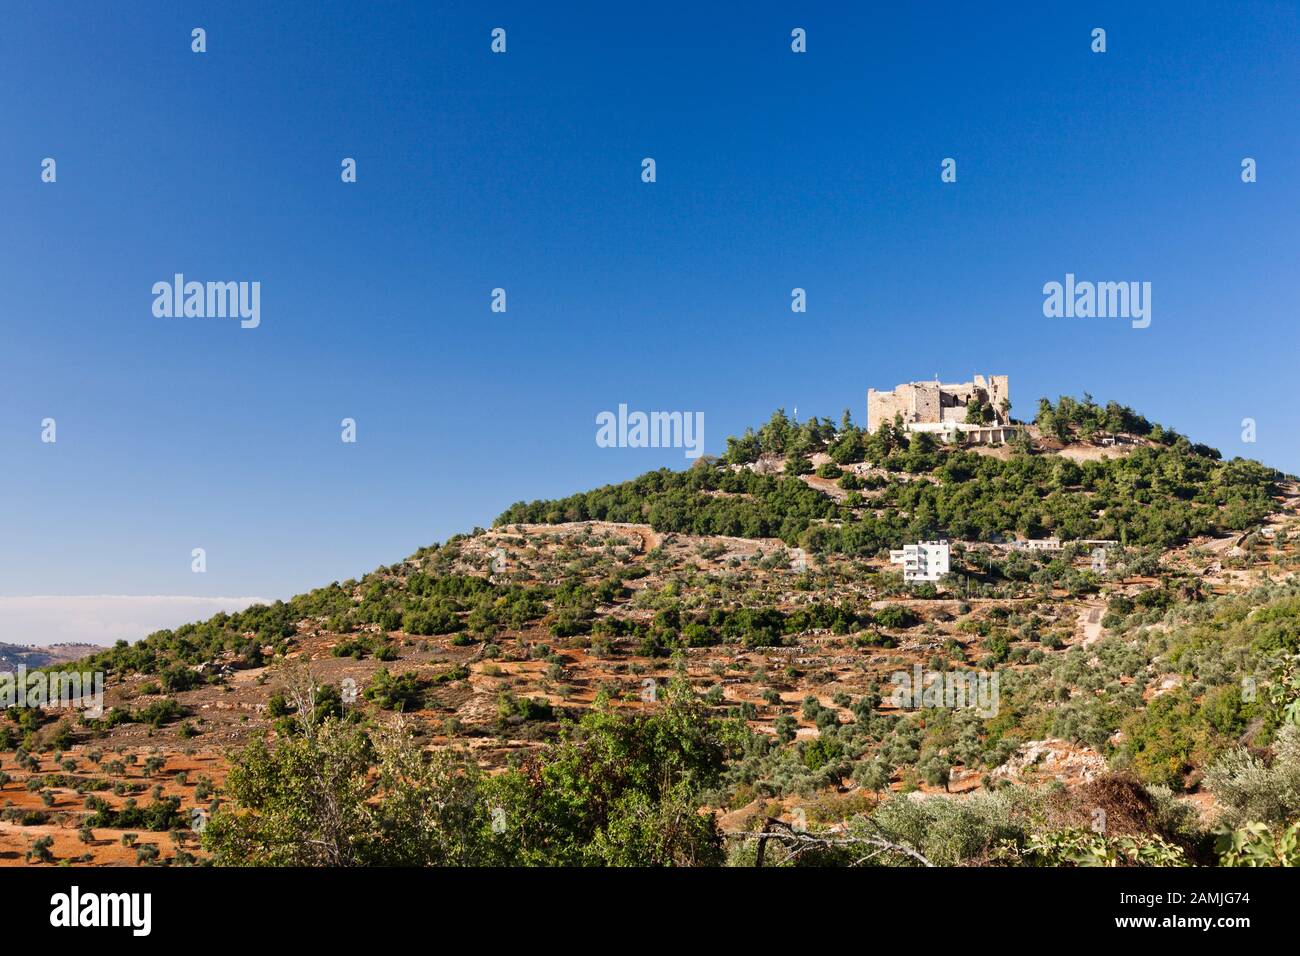 Ajloun castle hi-res stock photography and images - Alamy